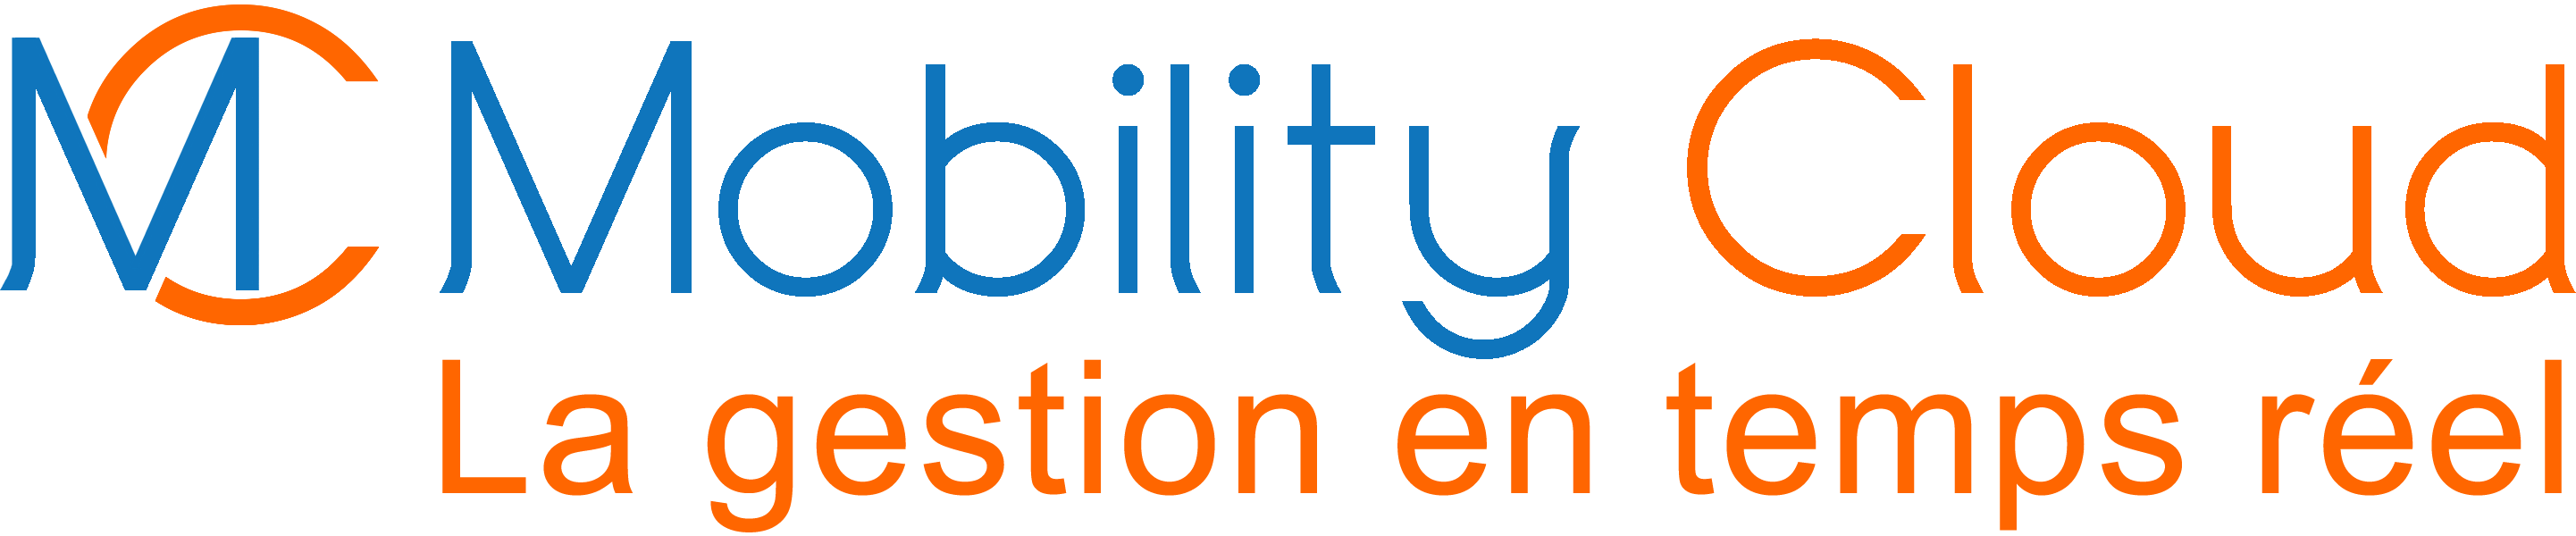 Mobility Cloud Company Logo